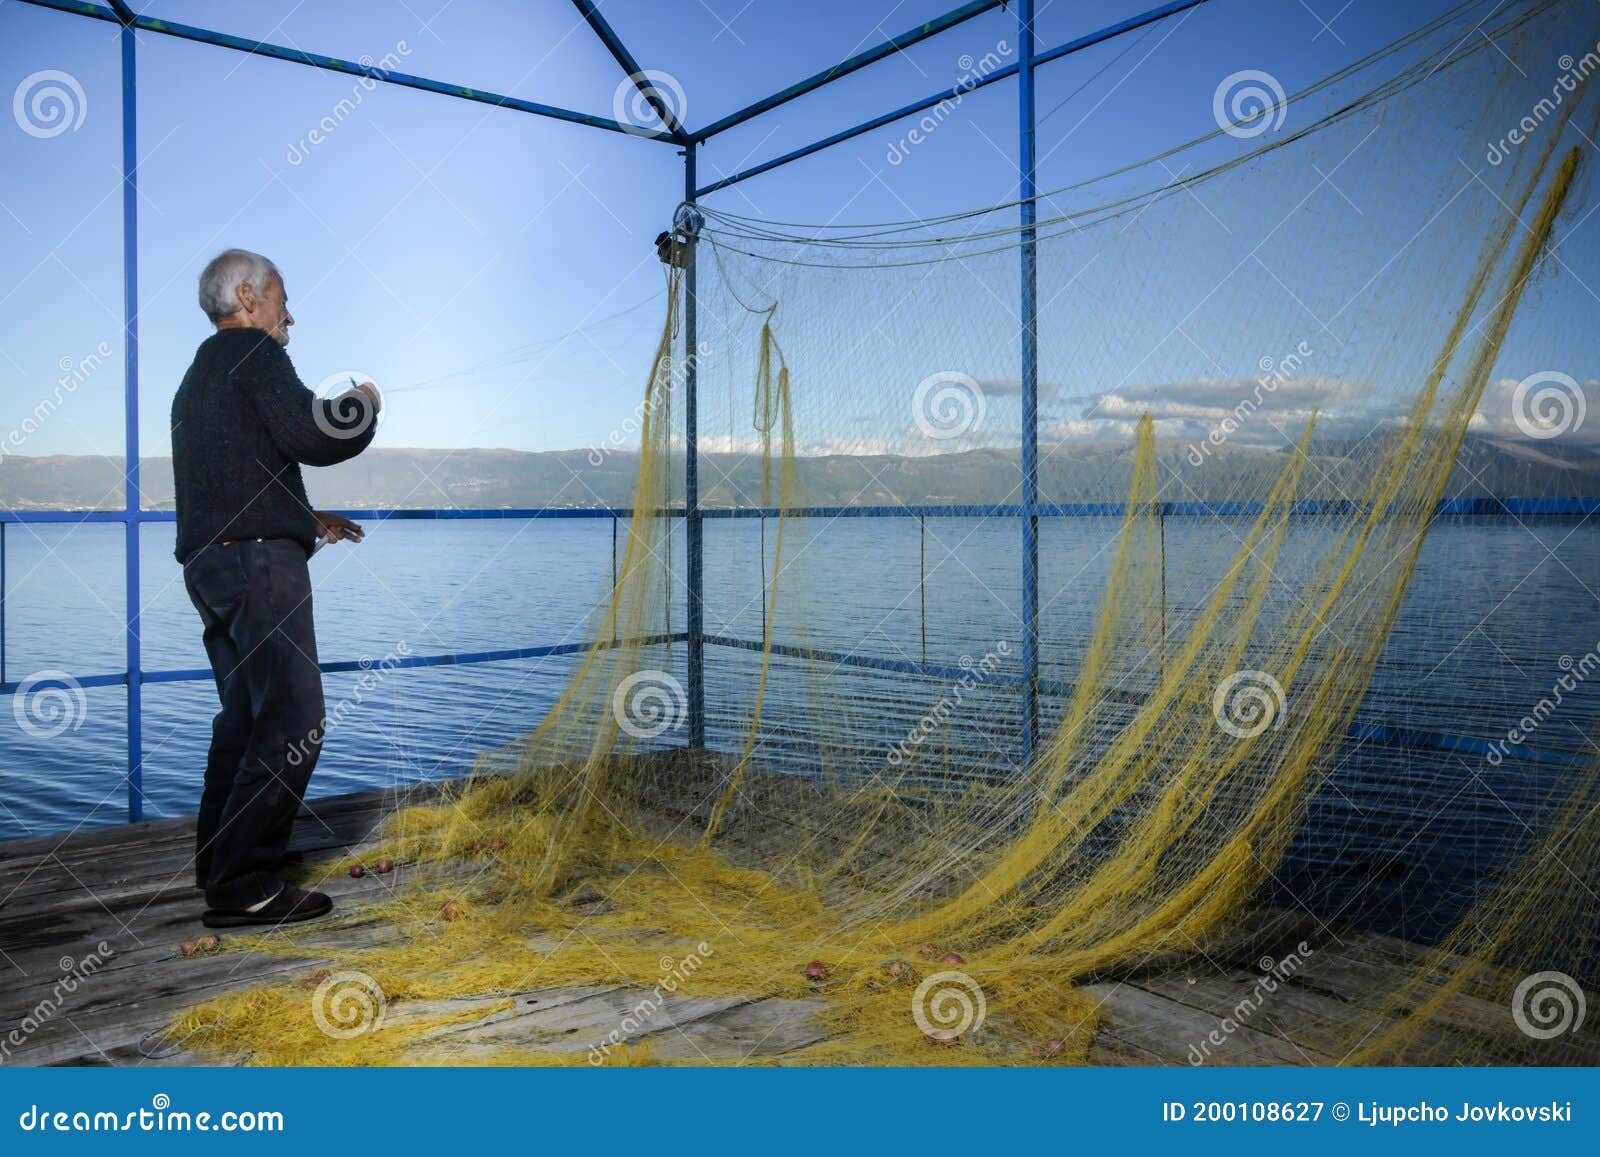 Fisher Making Fishing Net Stock Photos - 74 Images